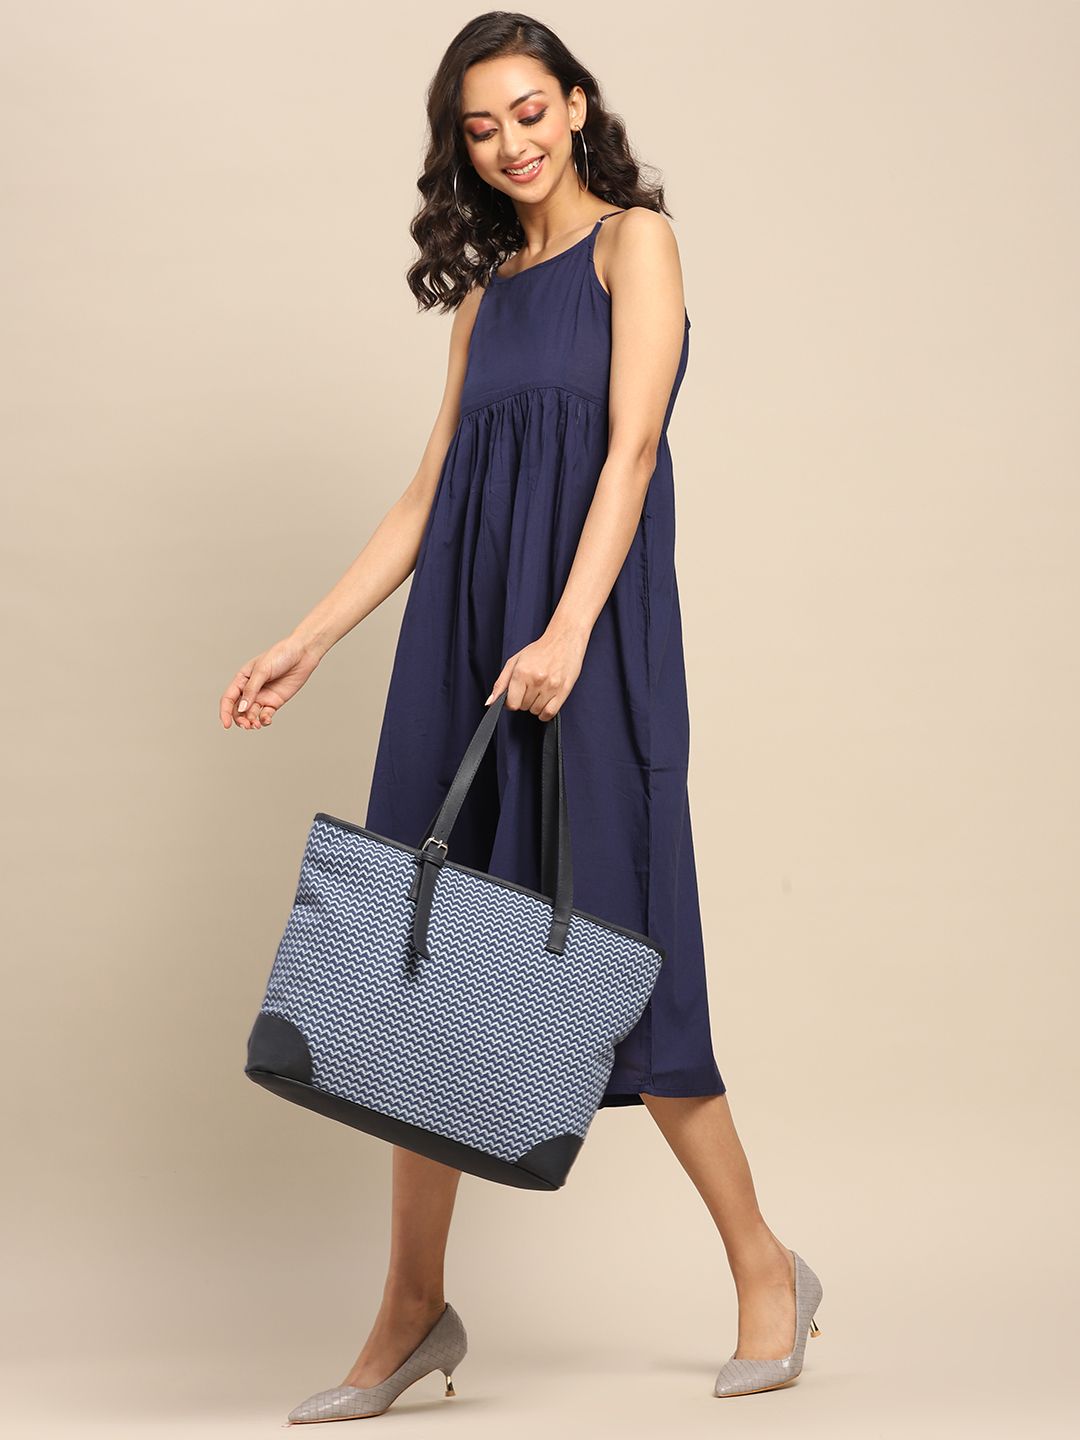 Anouk Blue Printed Shoulder Bag Price in India